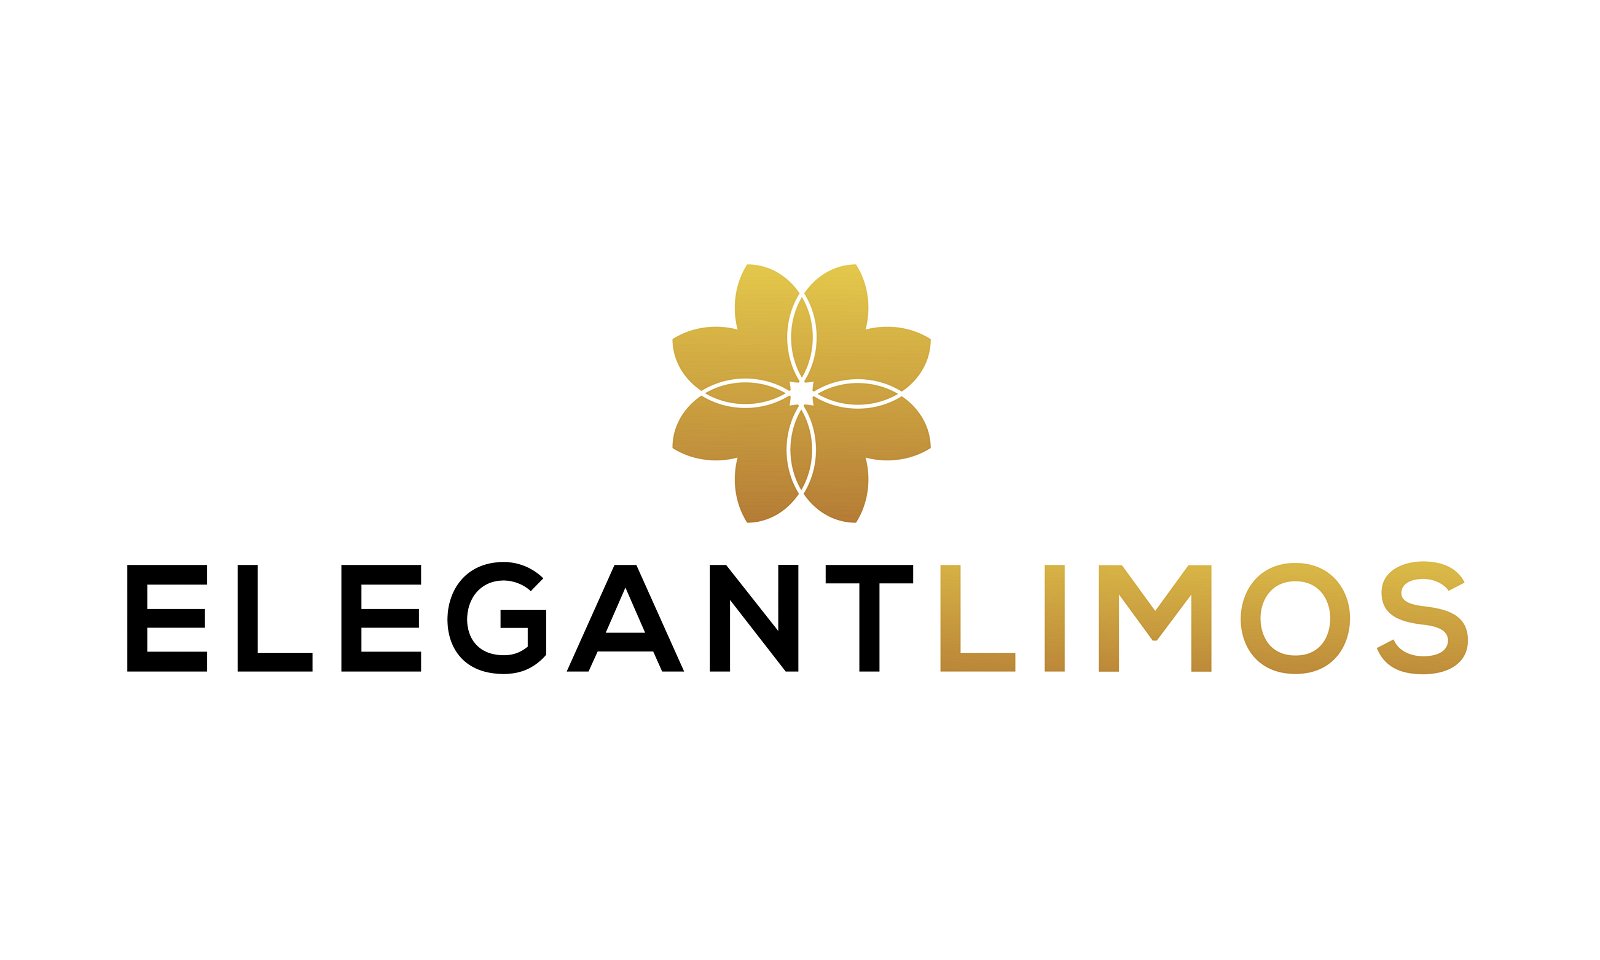 ElegantLimos.com - Creative brandable domain for sale